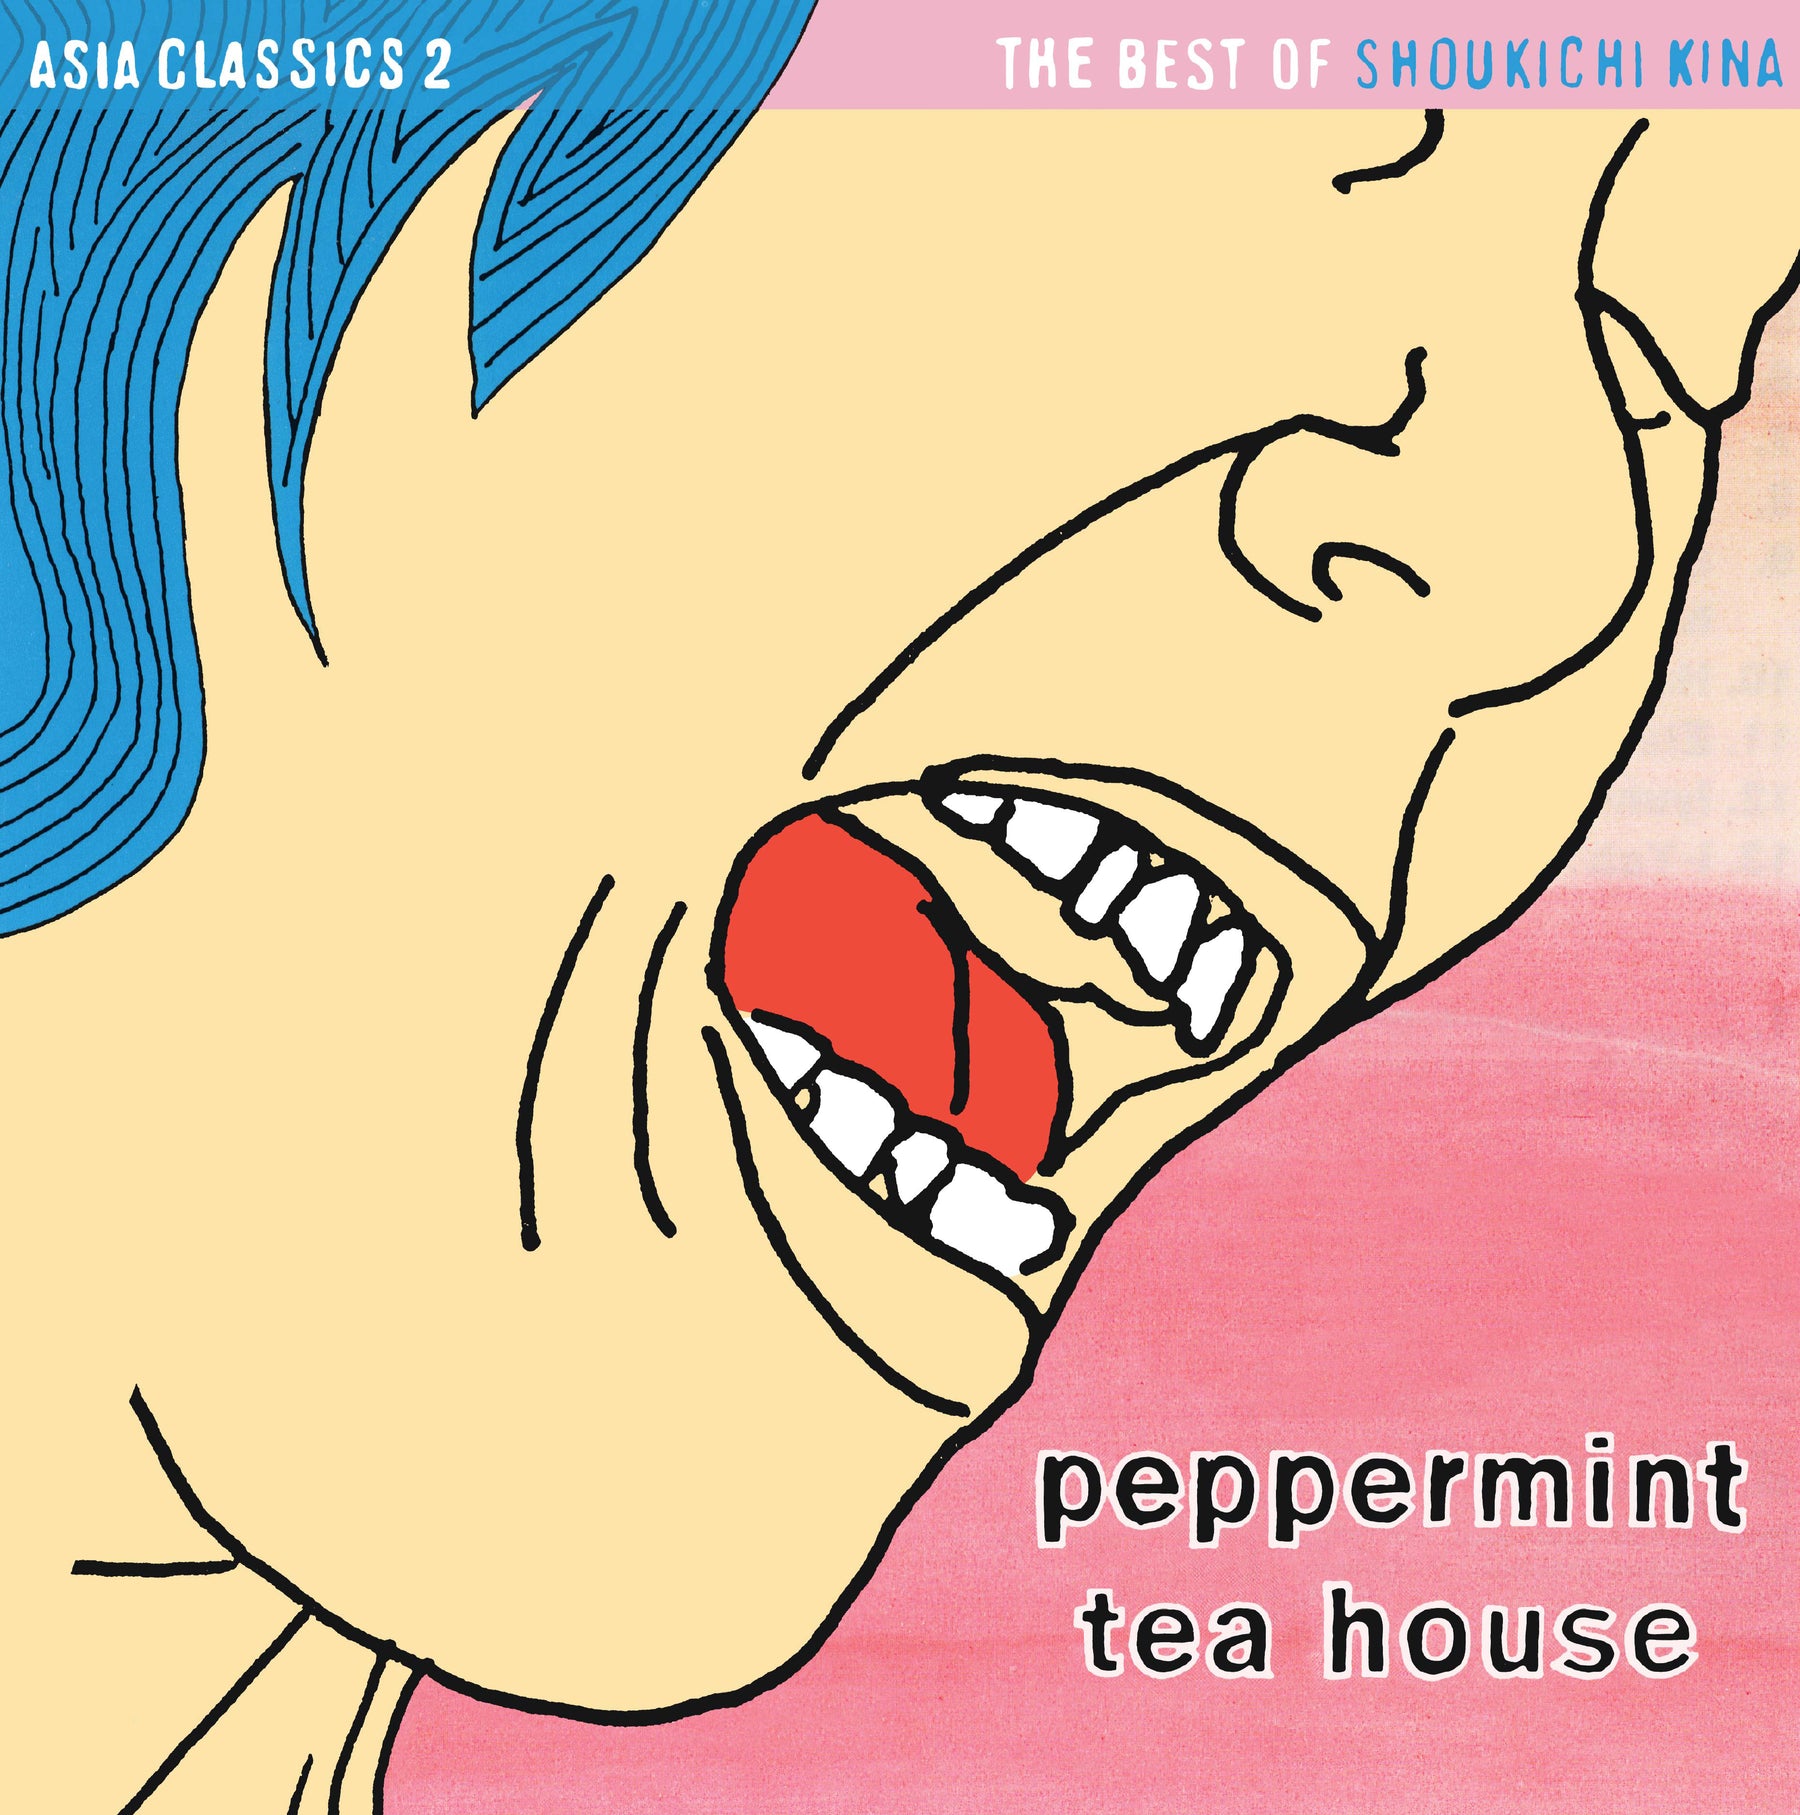 Asia Classics : The Best of Shoukichi Kina - Peppemint Tea House